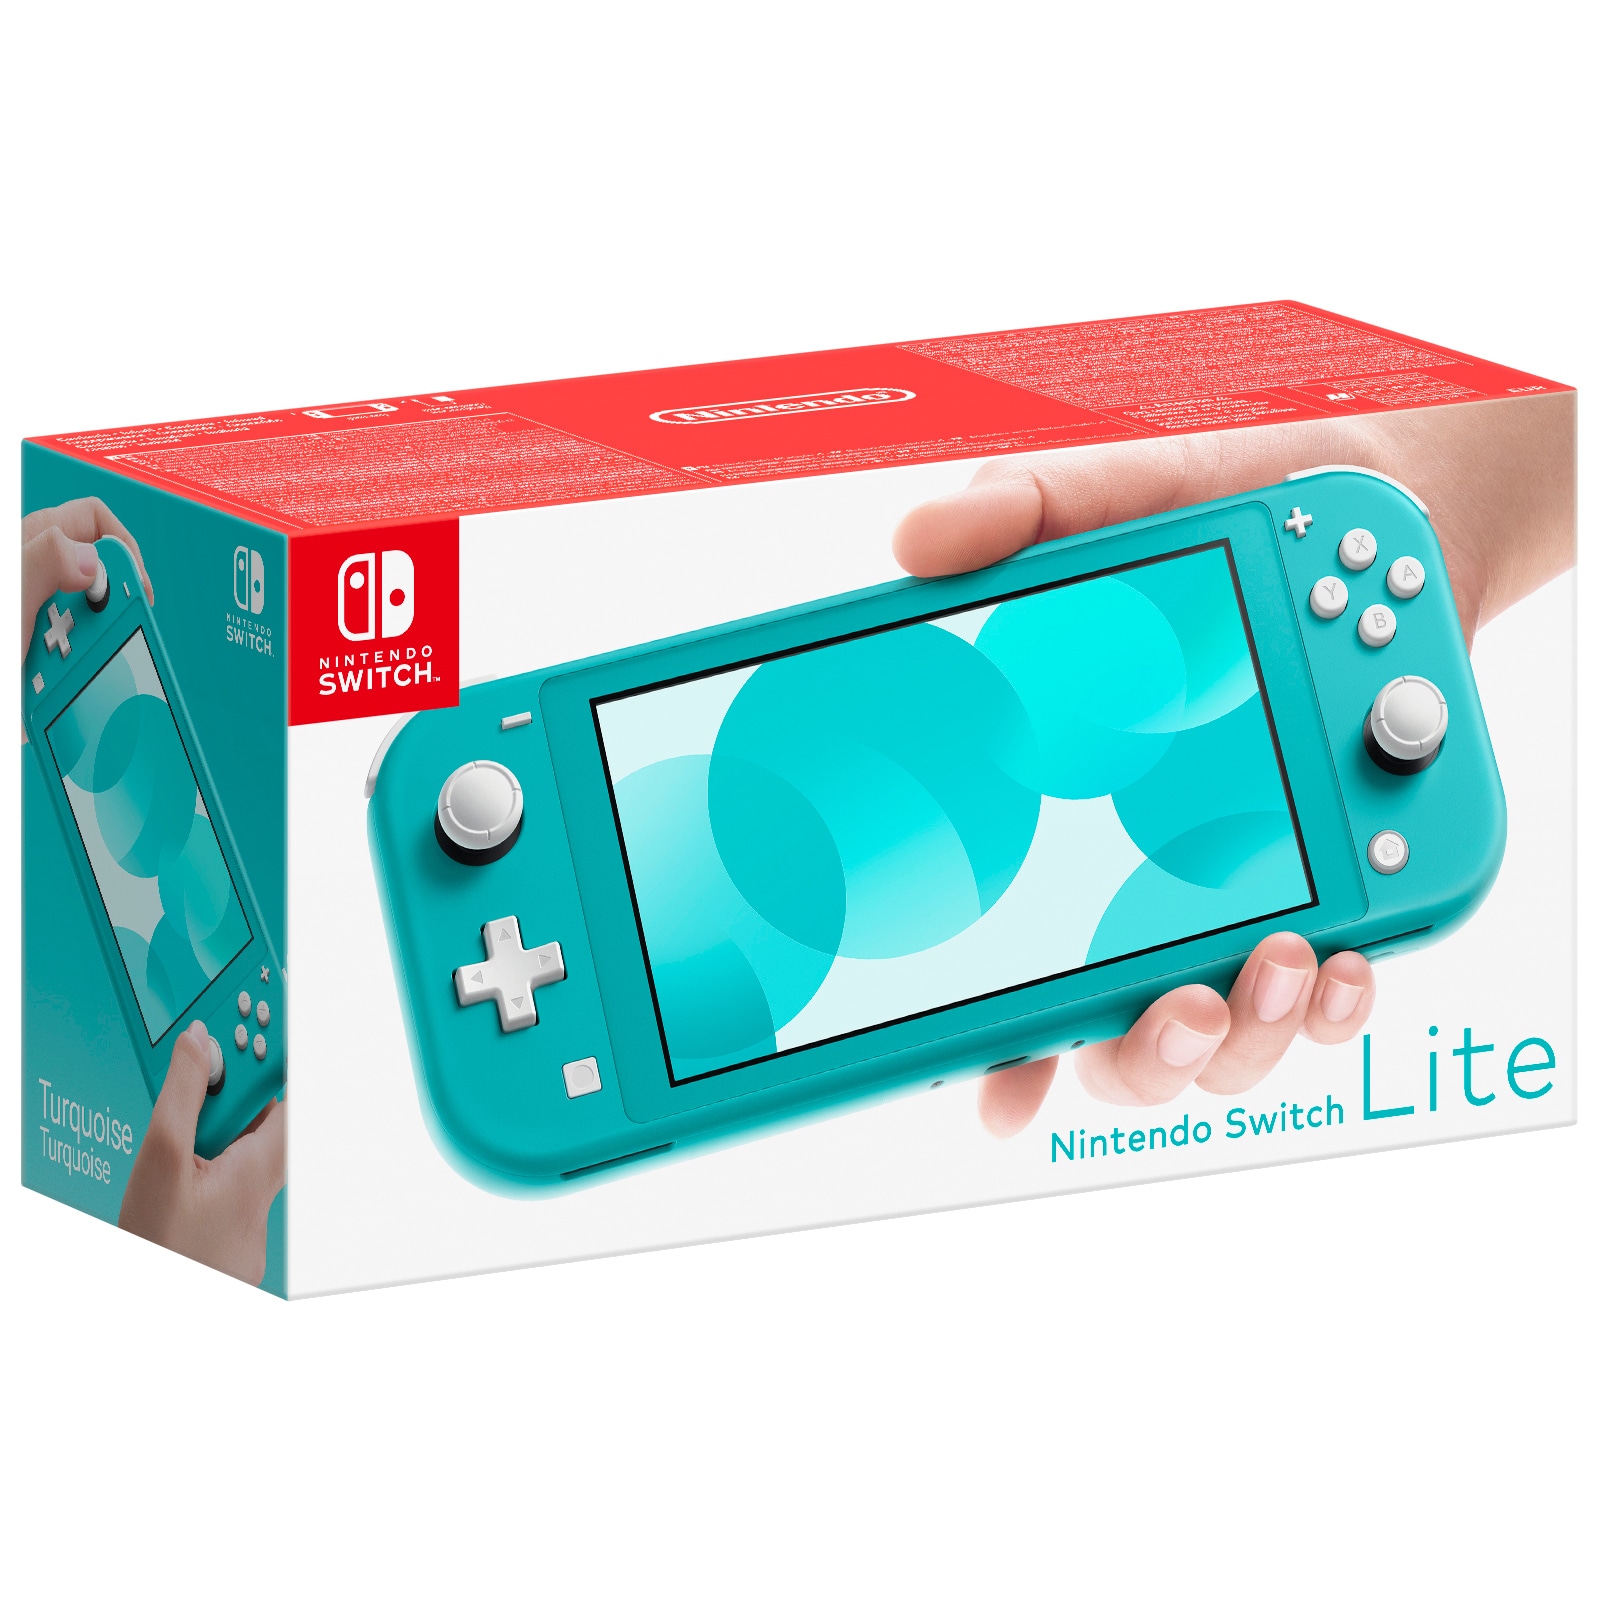 Nintendo Switch Lite spelkonsol (turkos) - Elgiganten